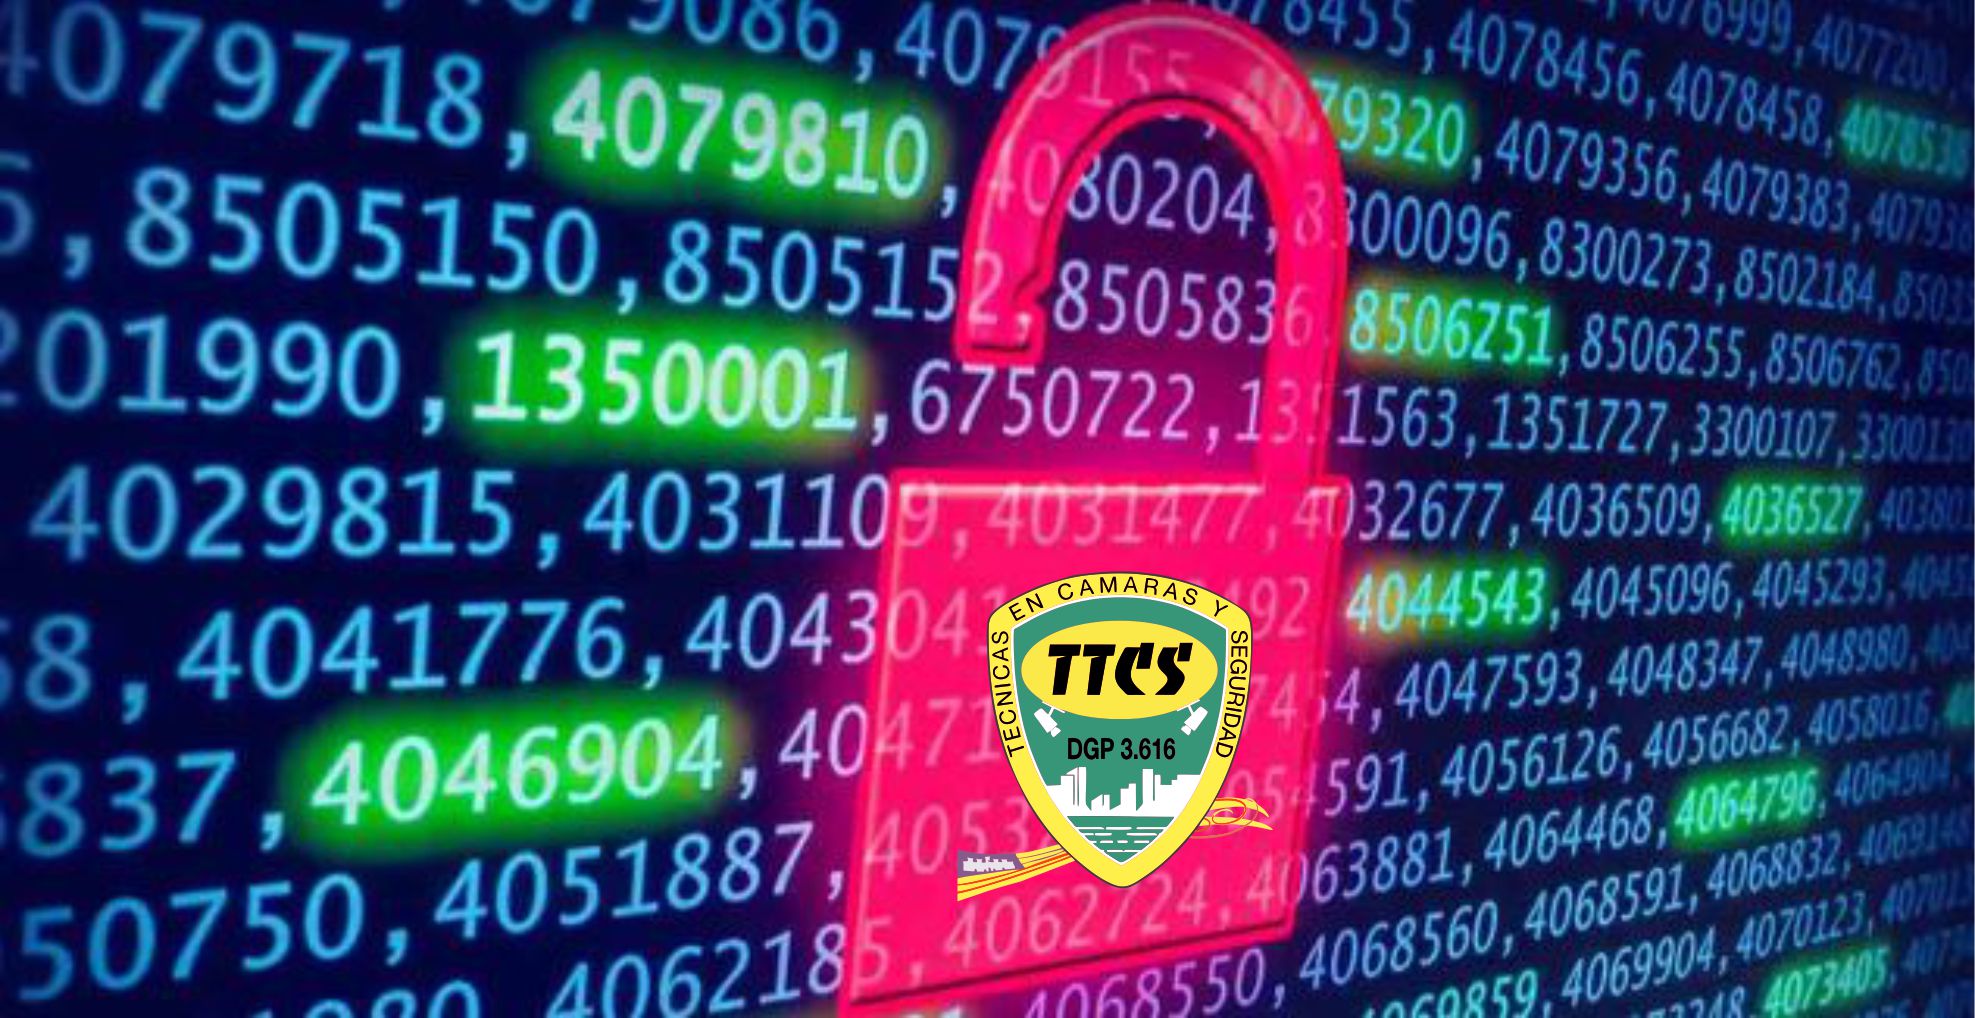 TTCS Seguridad camara web 2